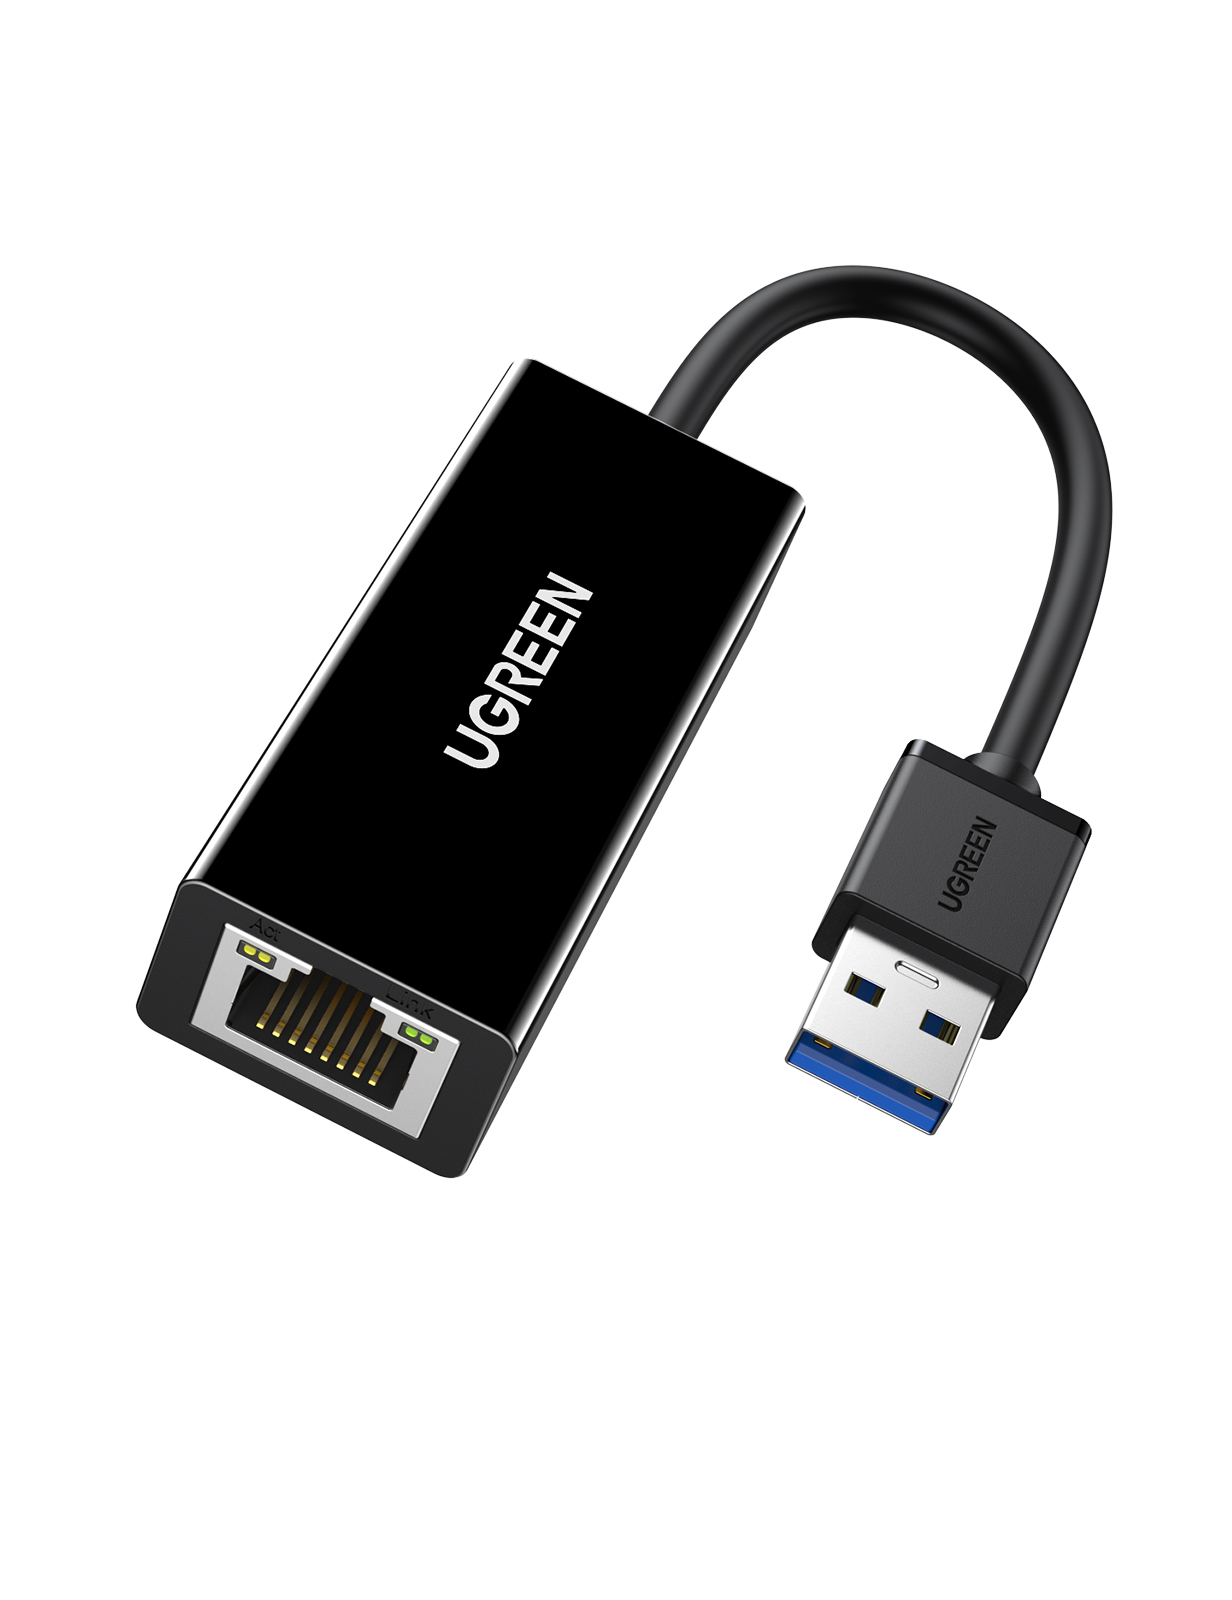 UGREEN USB 3.0 Gigabit Ethernet Adapter (Black) - OPENED BOX 73831